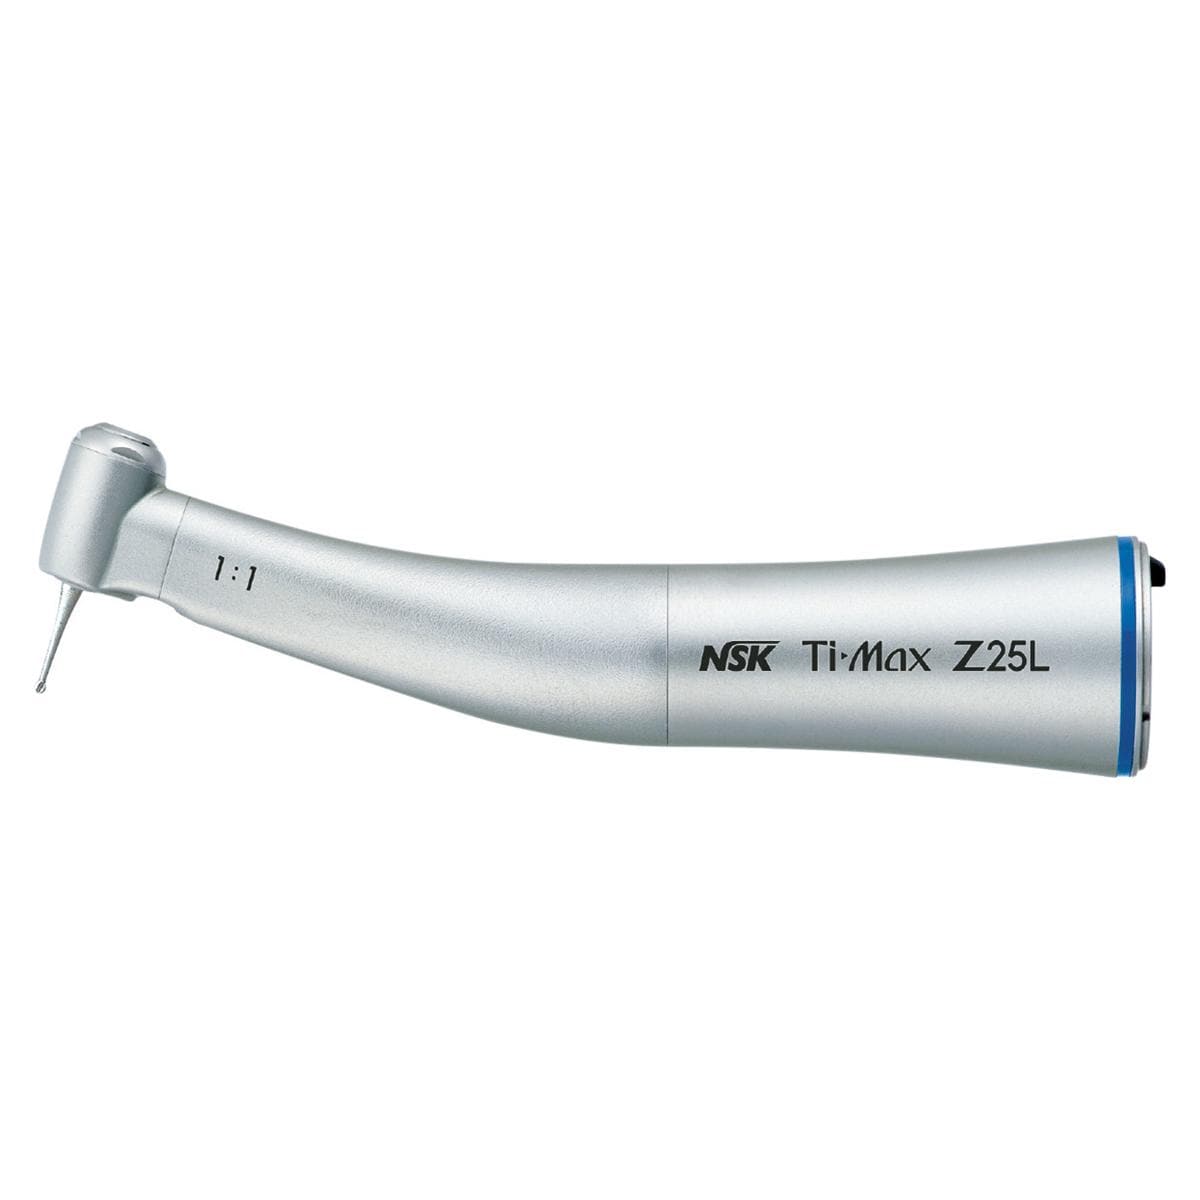 TI-MAX Z contre-angles avec lumire - Z25L, transmission 1:1, bleu, single spray